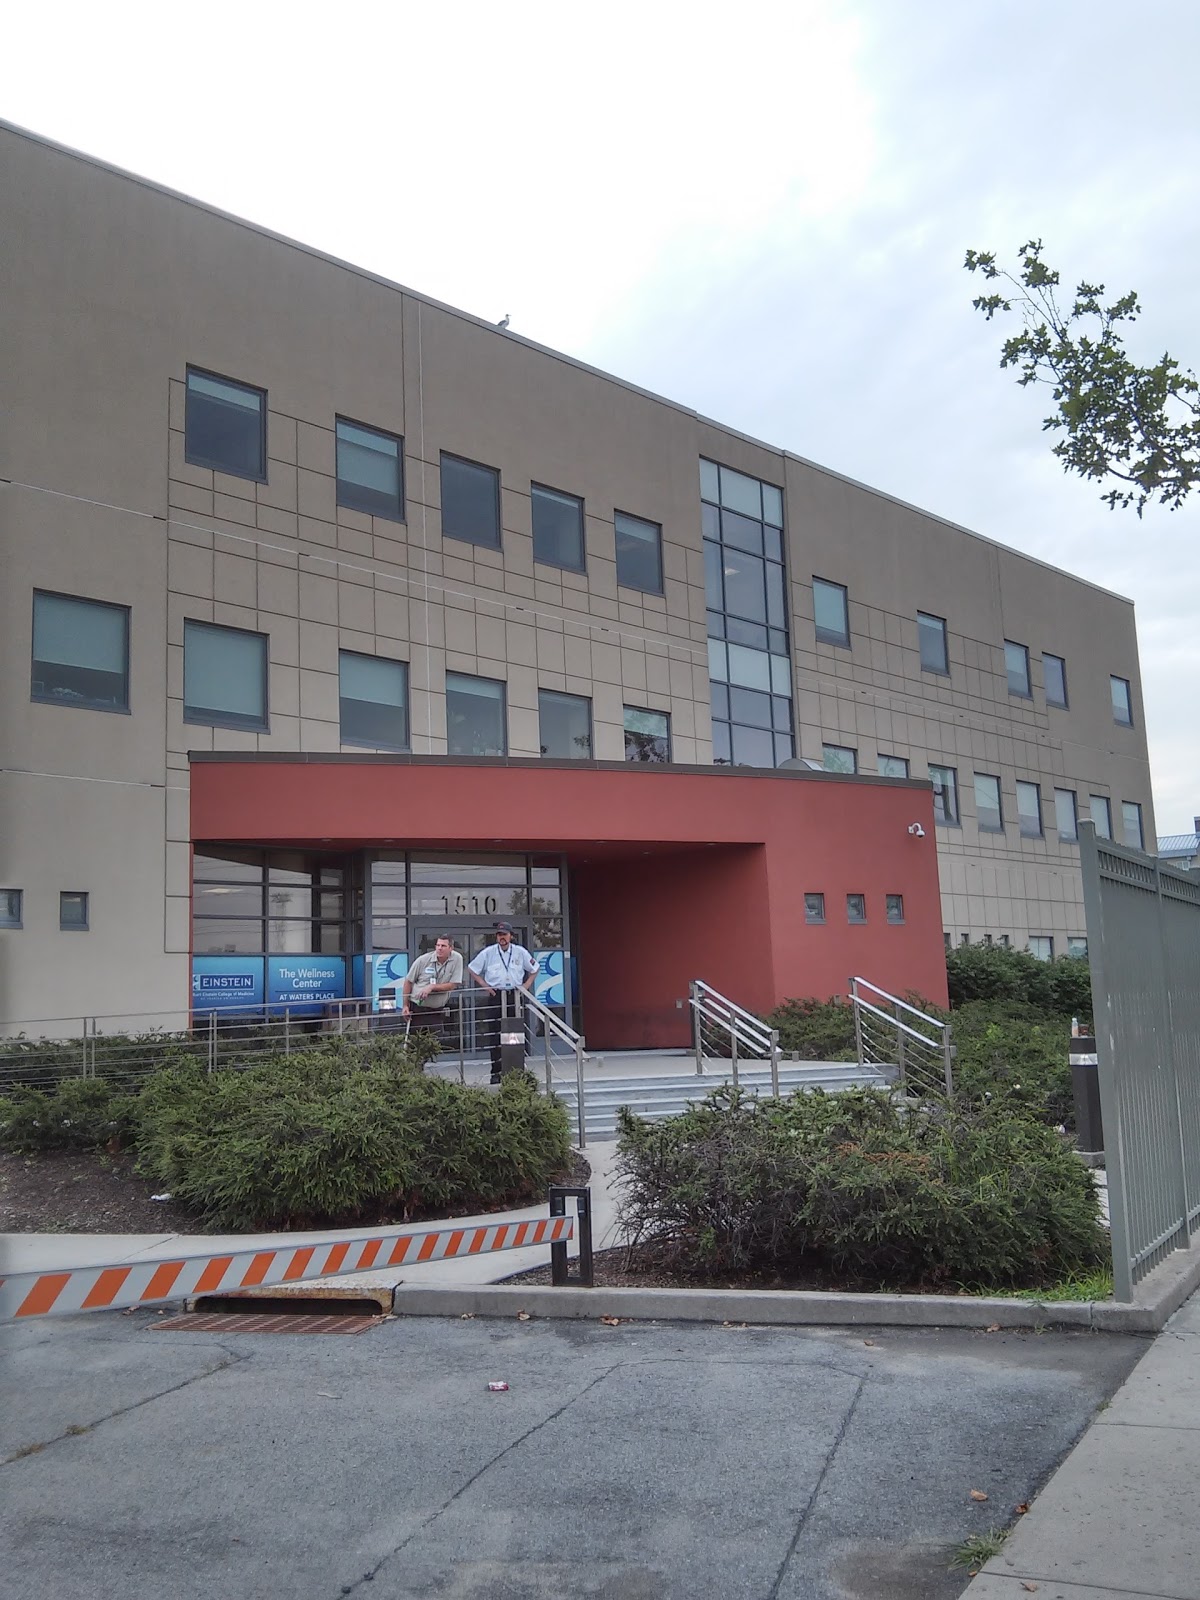 Photo of Yeshiva University in Bronx City, New York, United States - 1 Picture of Point of interest, Establishment, University